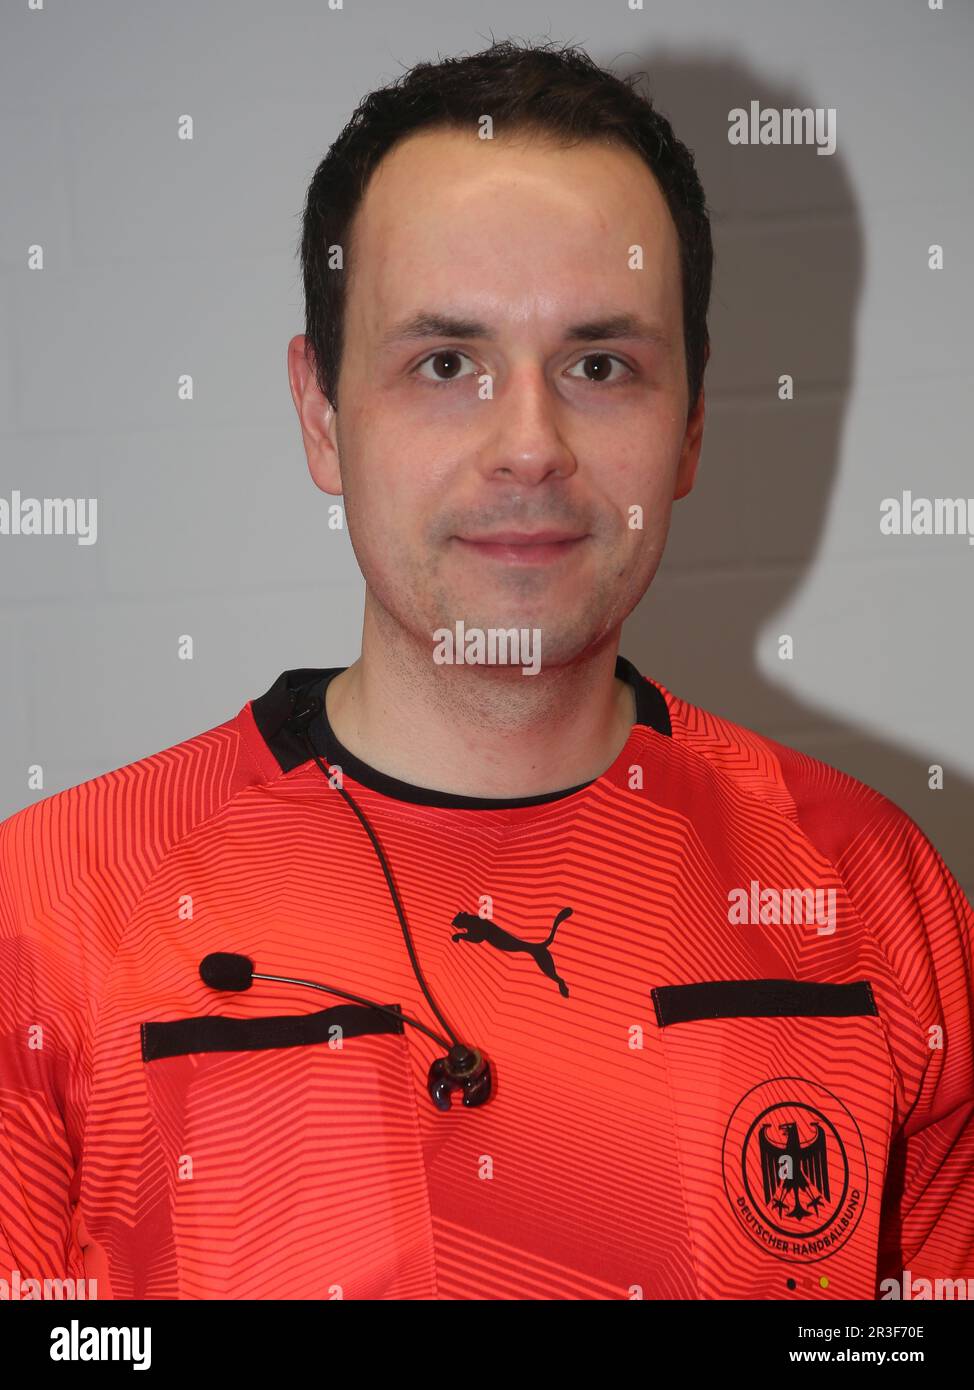 DHB Pallamano Referee Jannik otto HBL Liqui Moly Pallamano uomo Bundesliga Stagione 2021-22 Foto Stock